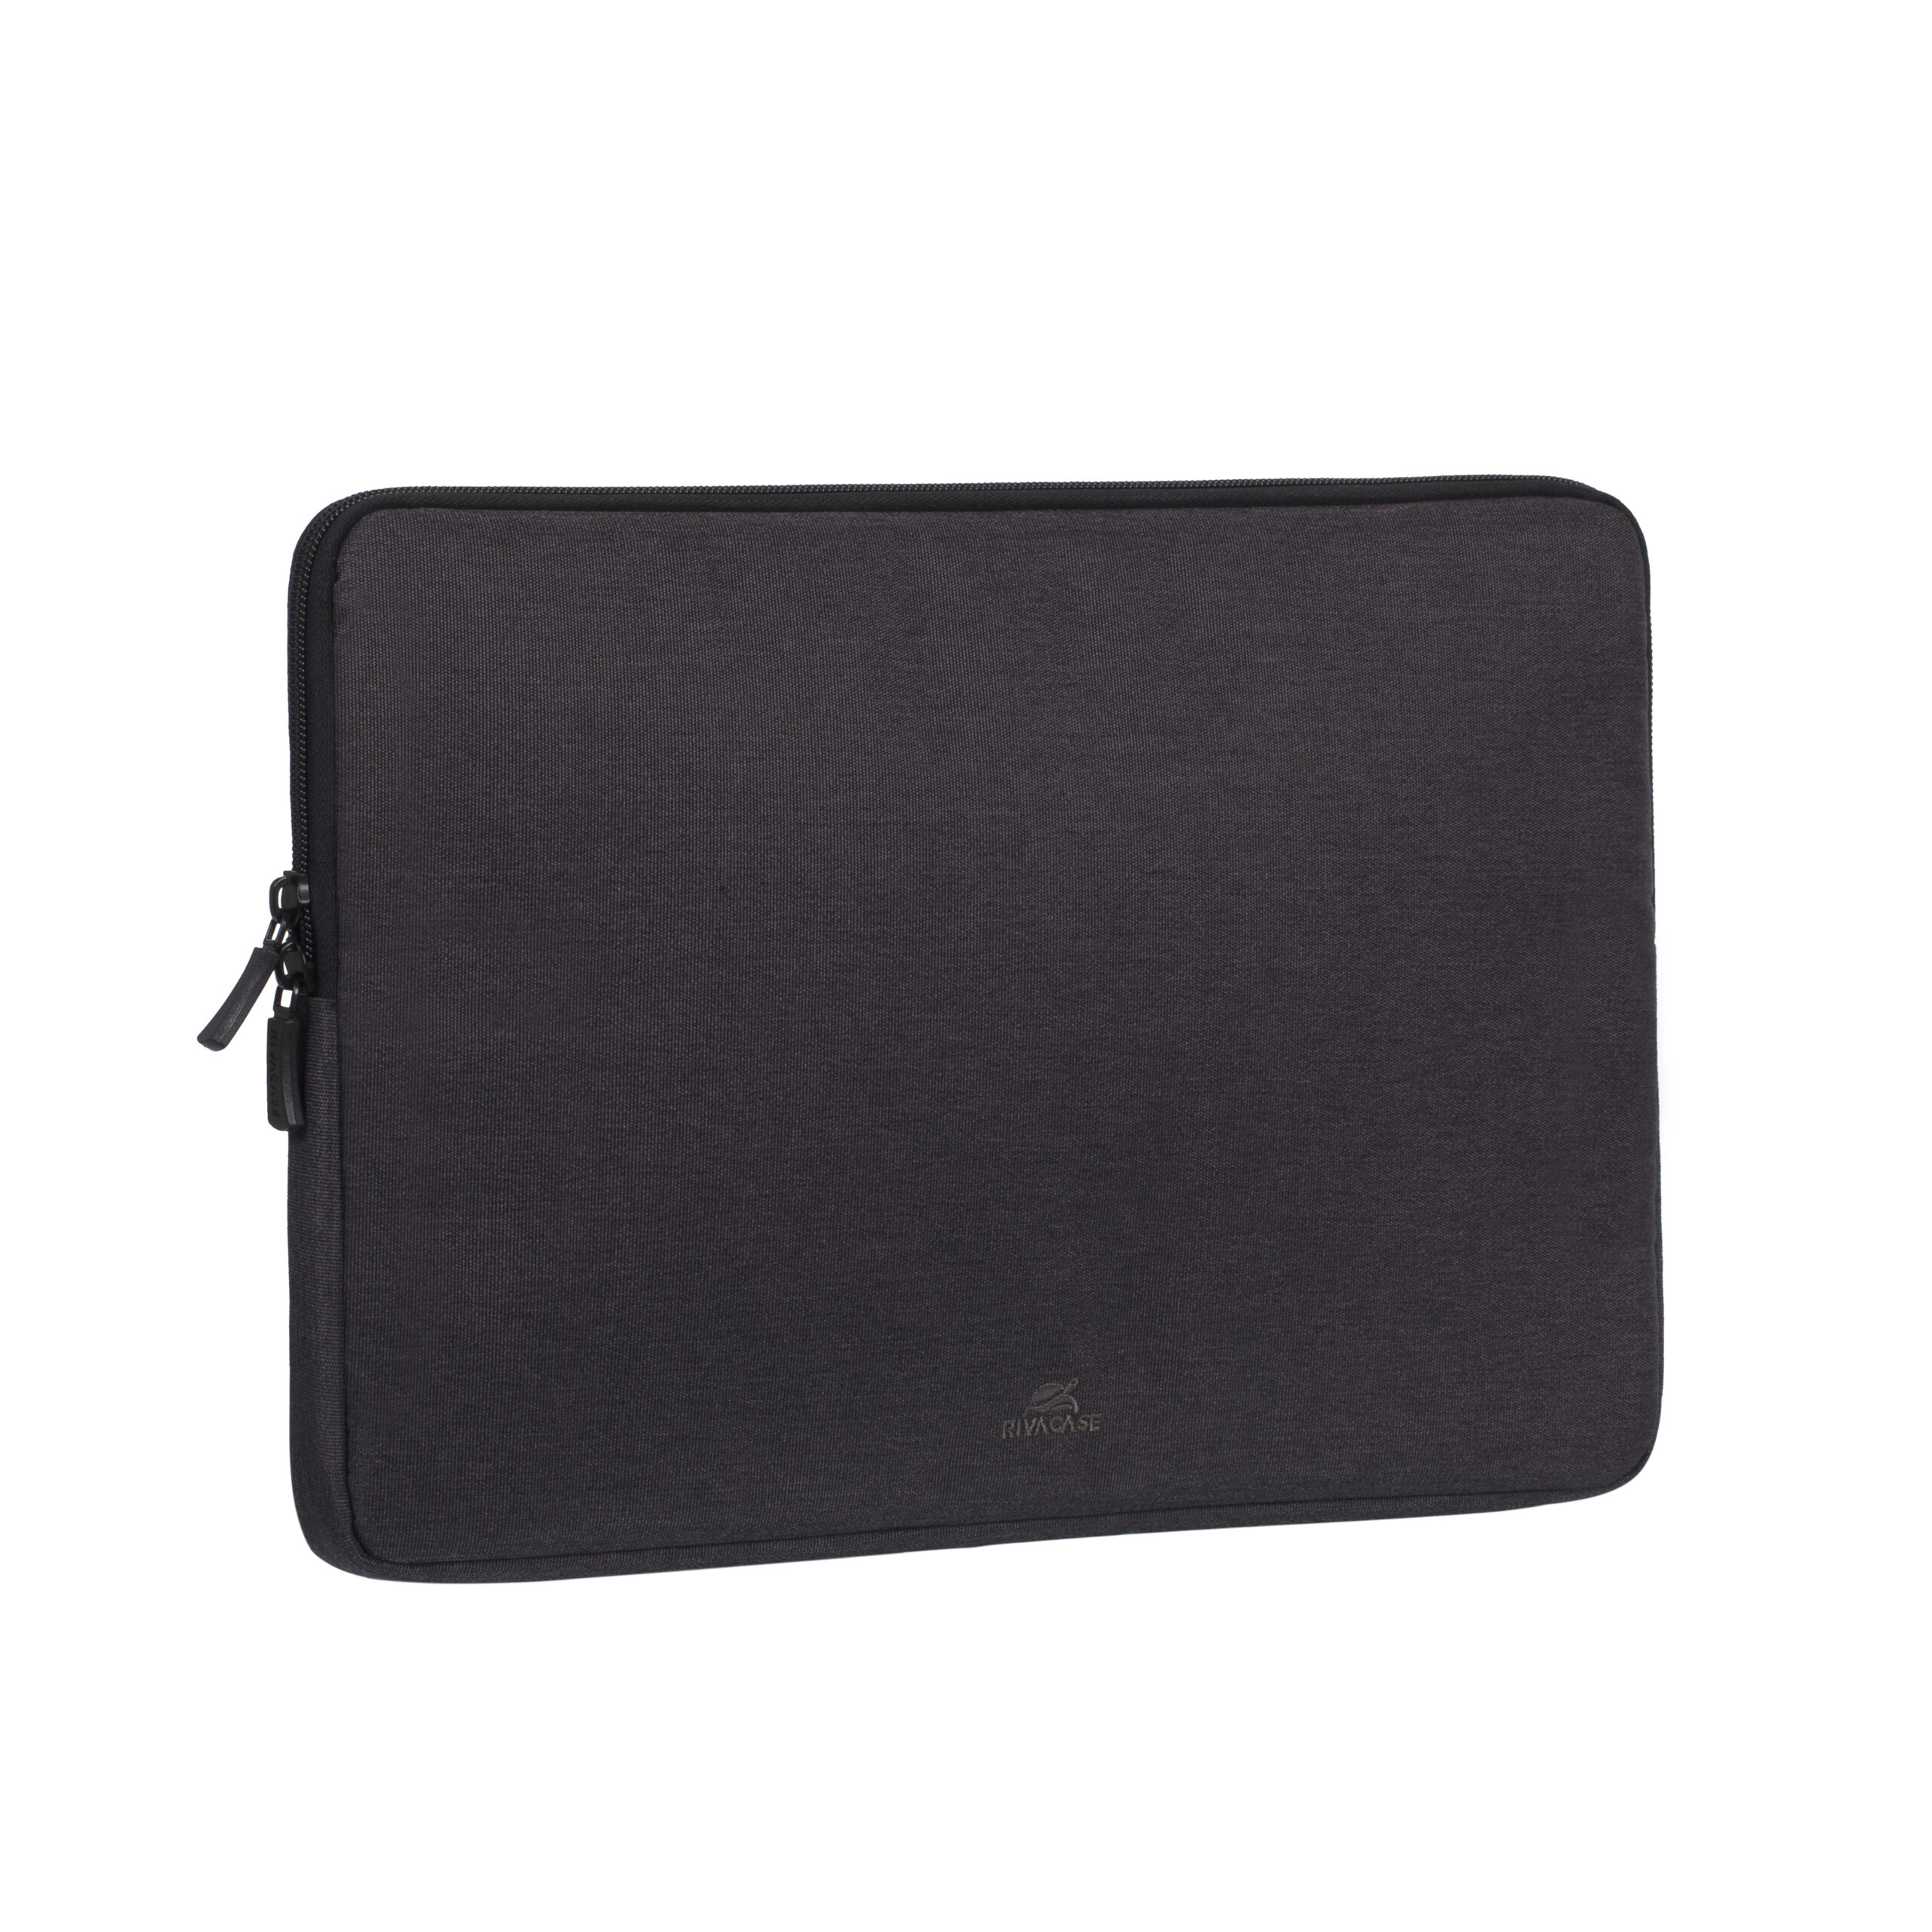 RIVACASE 7703 black Laptop sleeve 13.3″ / 12